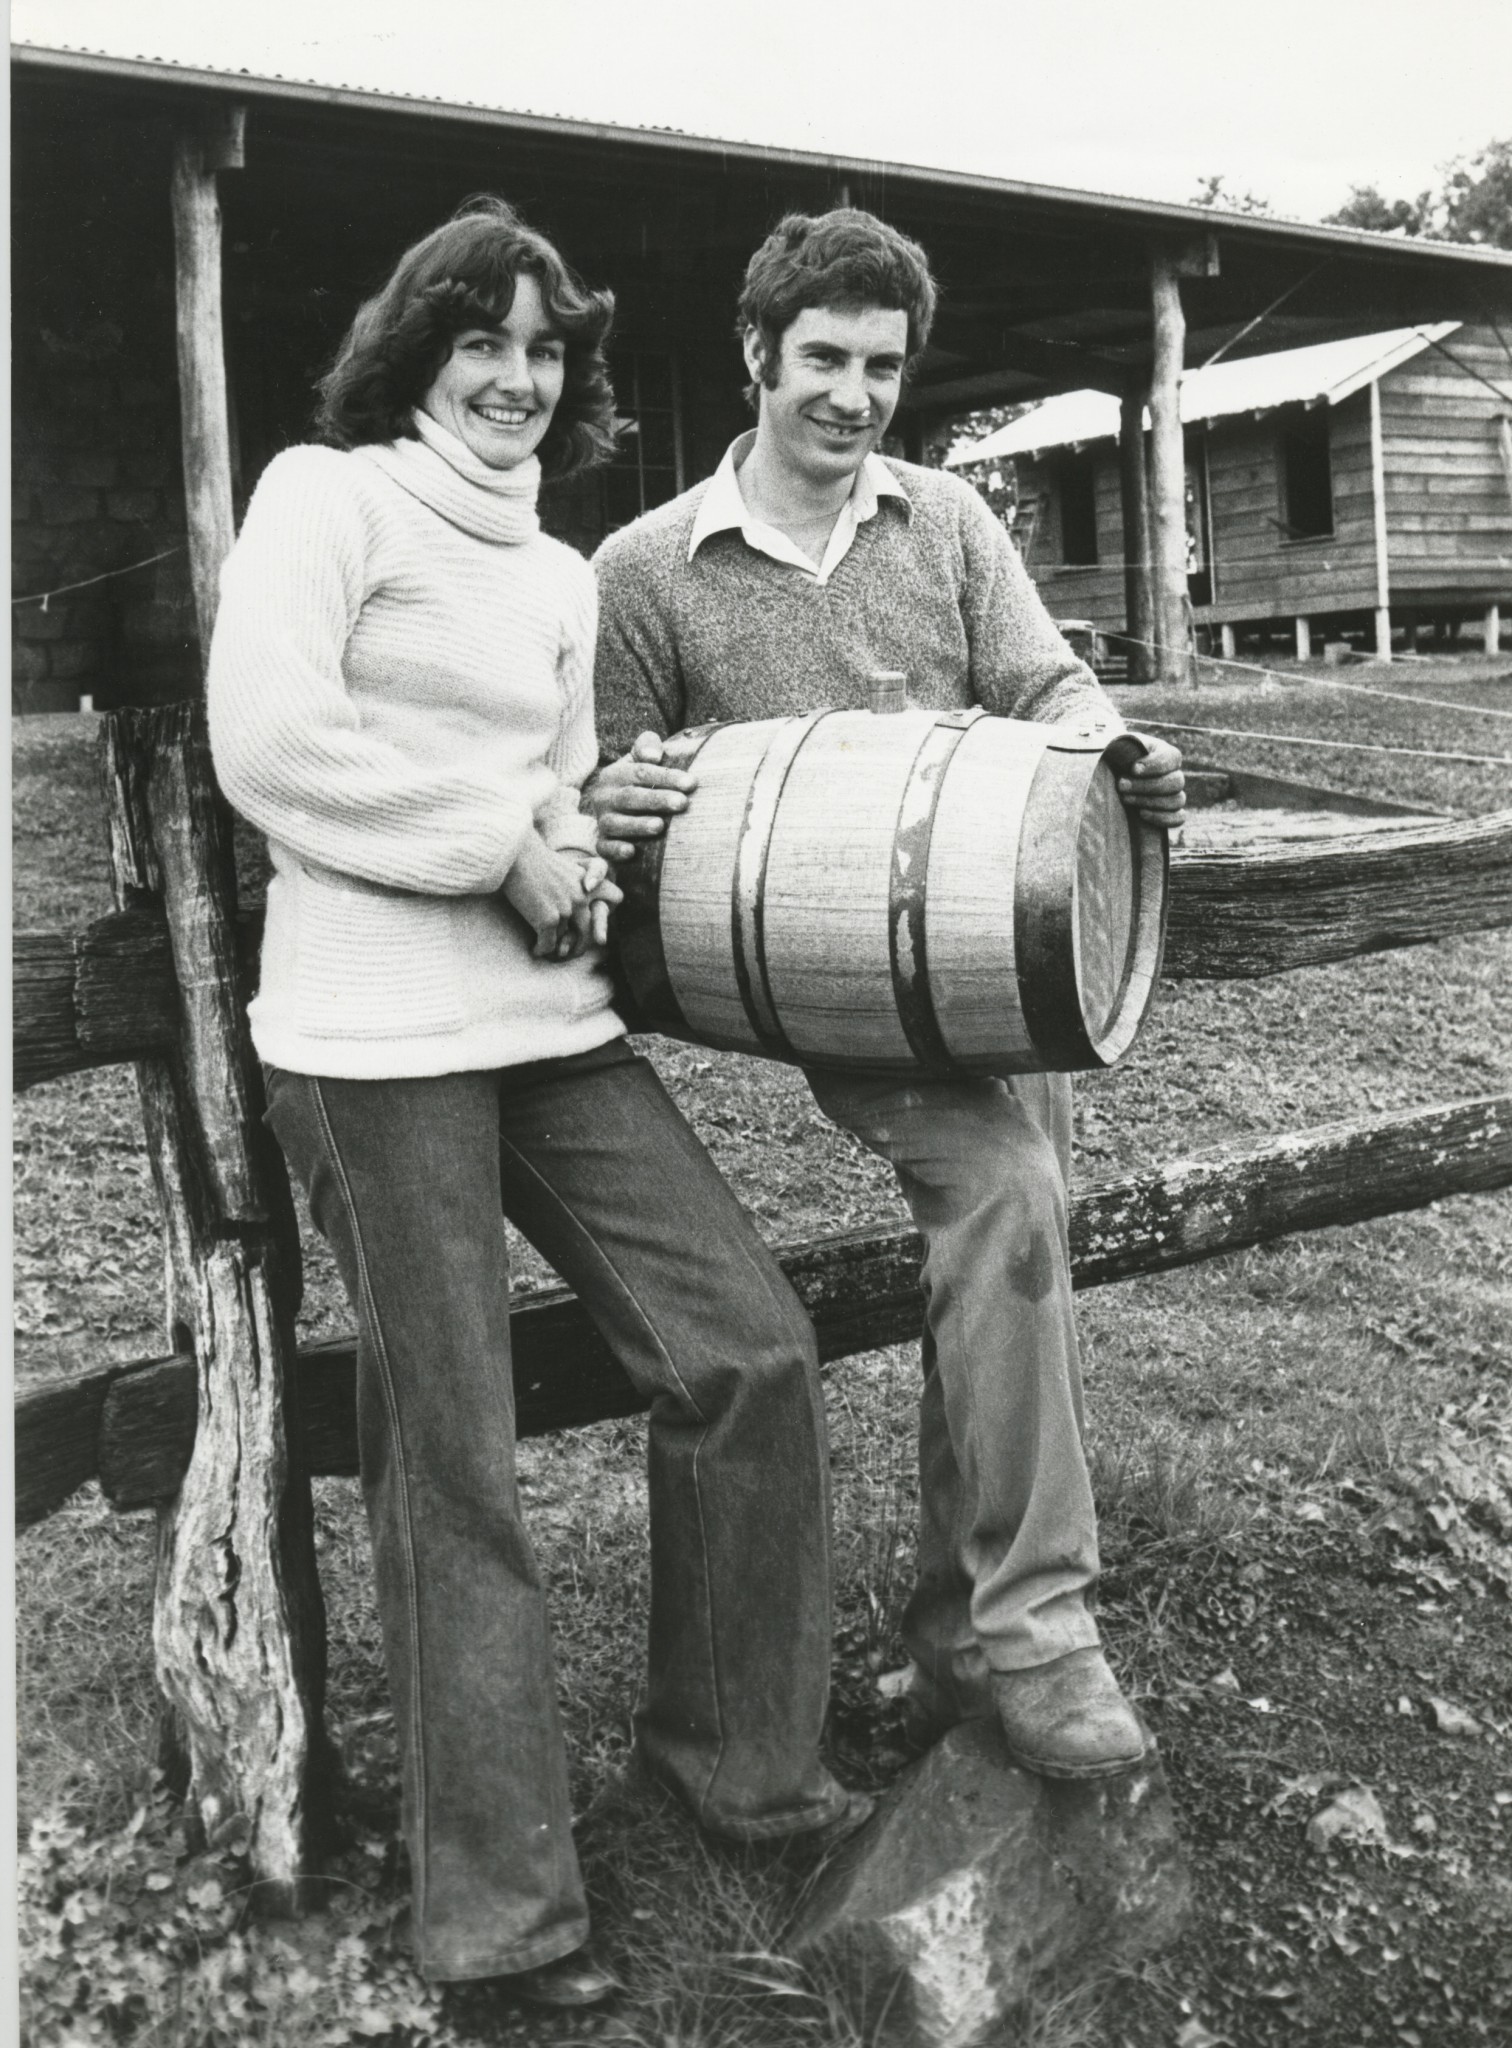 Old Photo of Couple holding barrel of wine